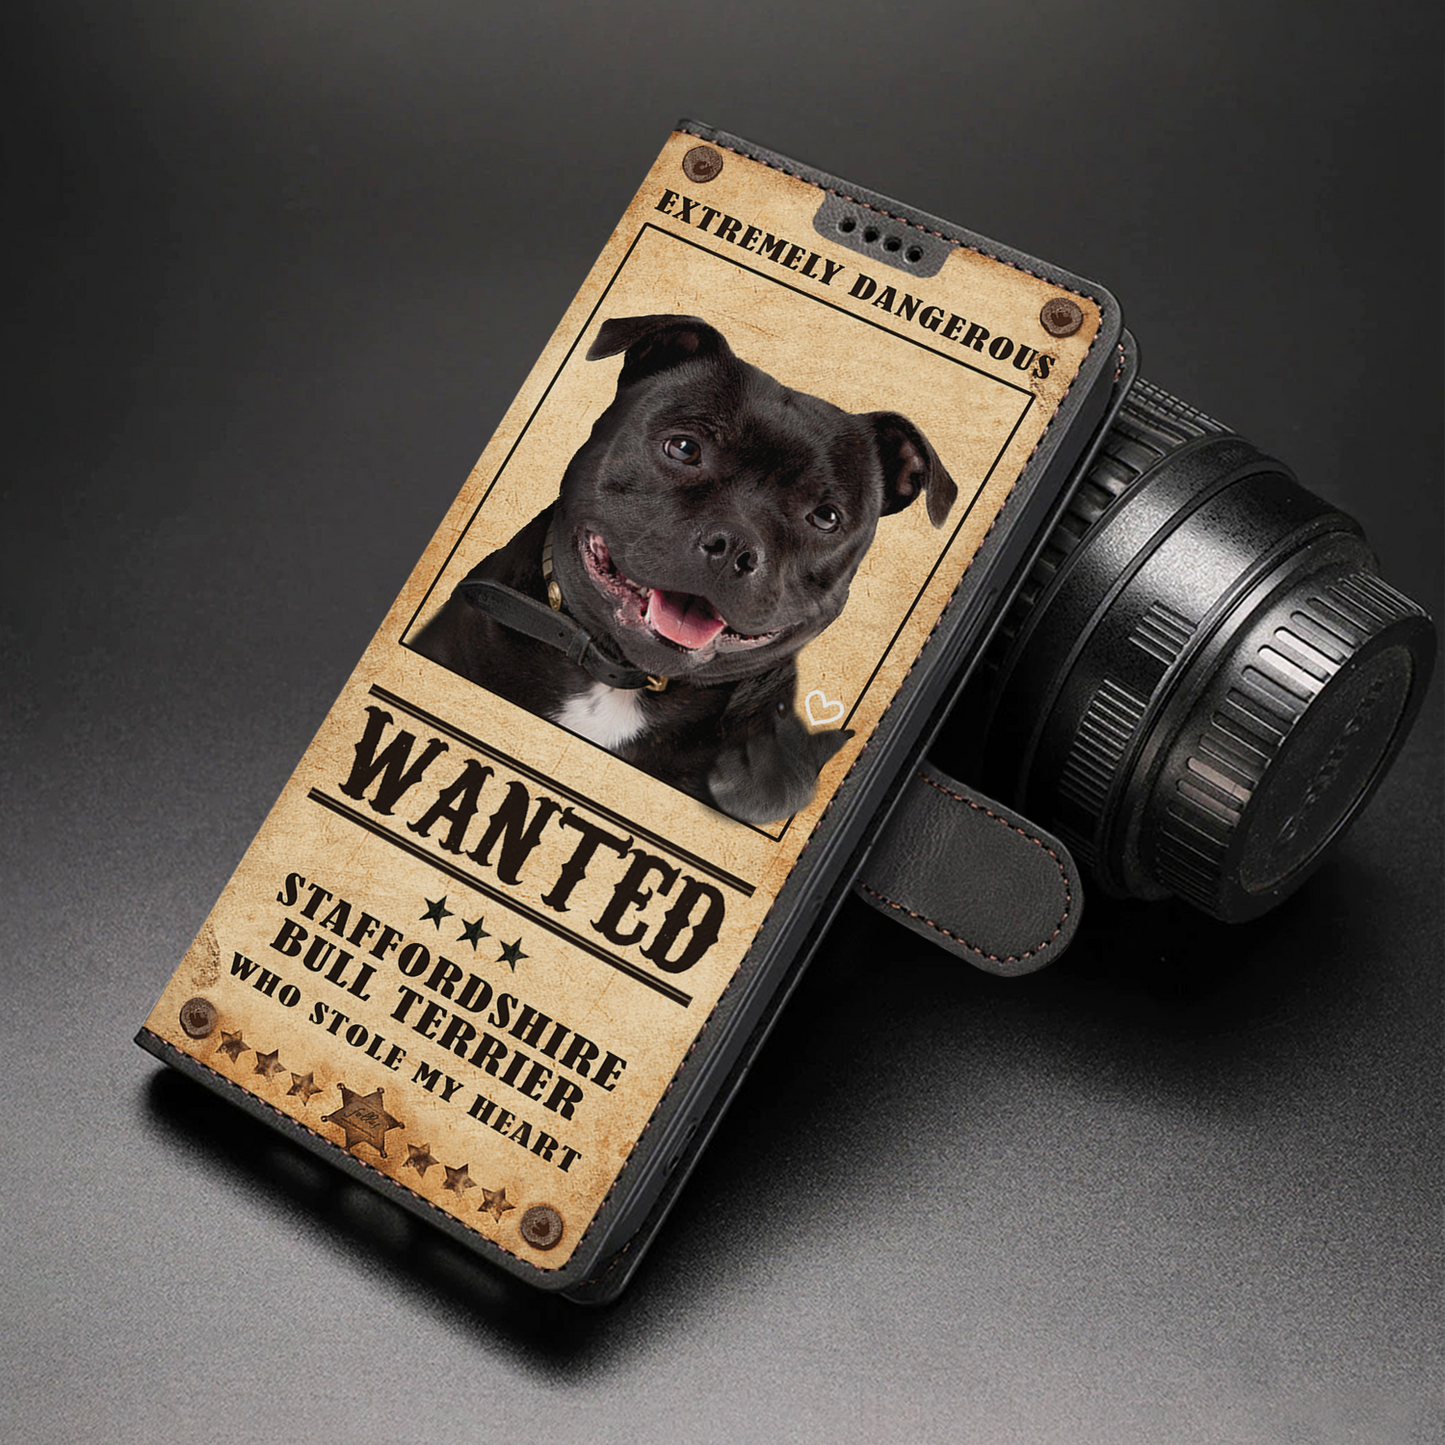 Heart Thief Staffordshire Bull Terrier - Love Inspired Portemonnaie Handyhülle V1